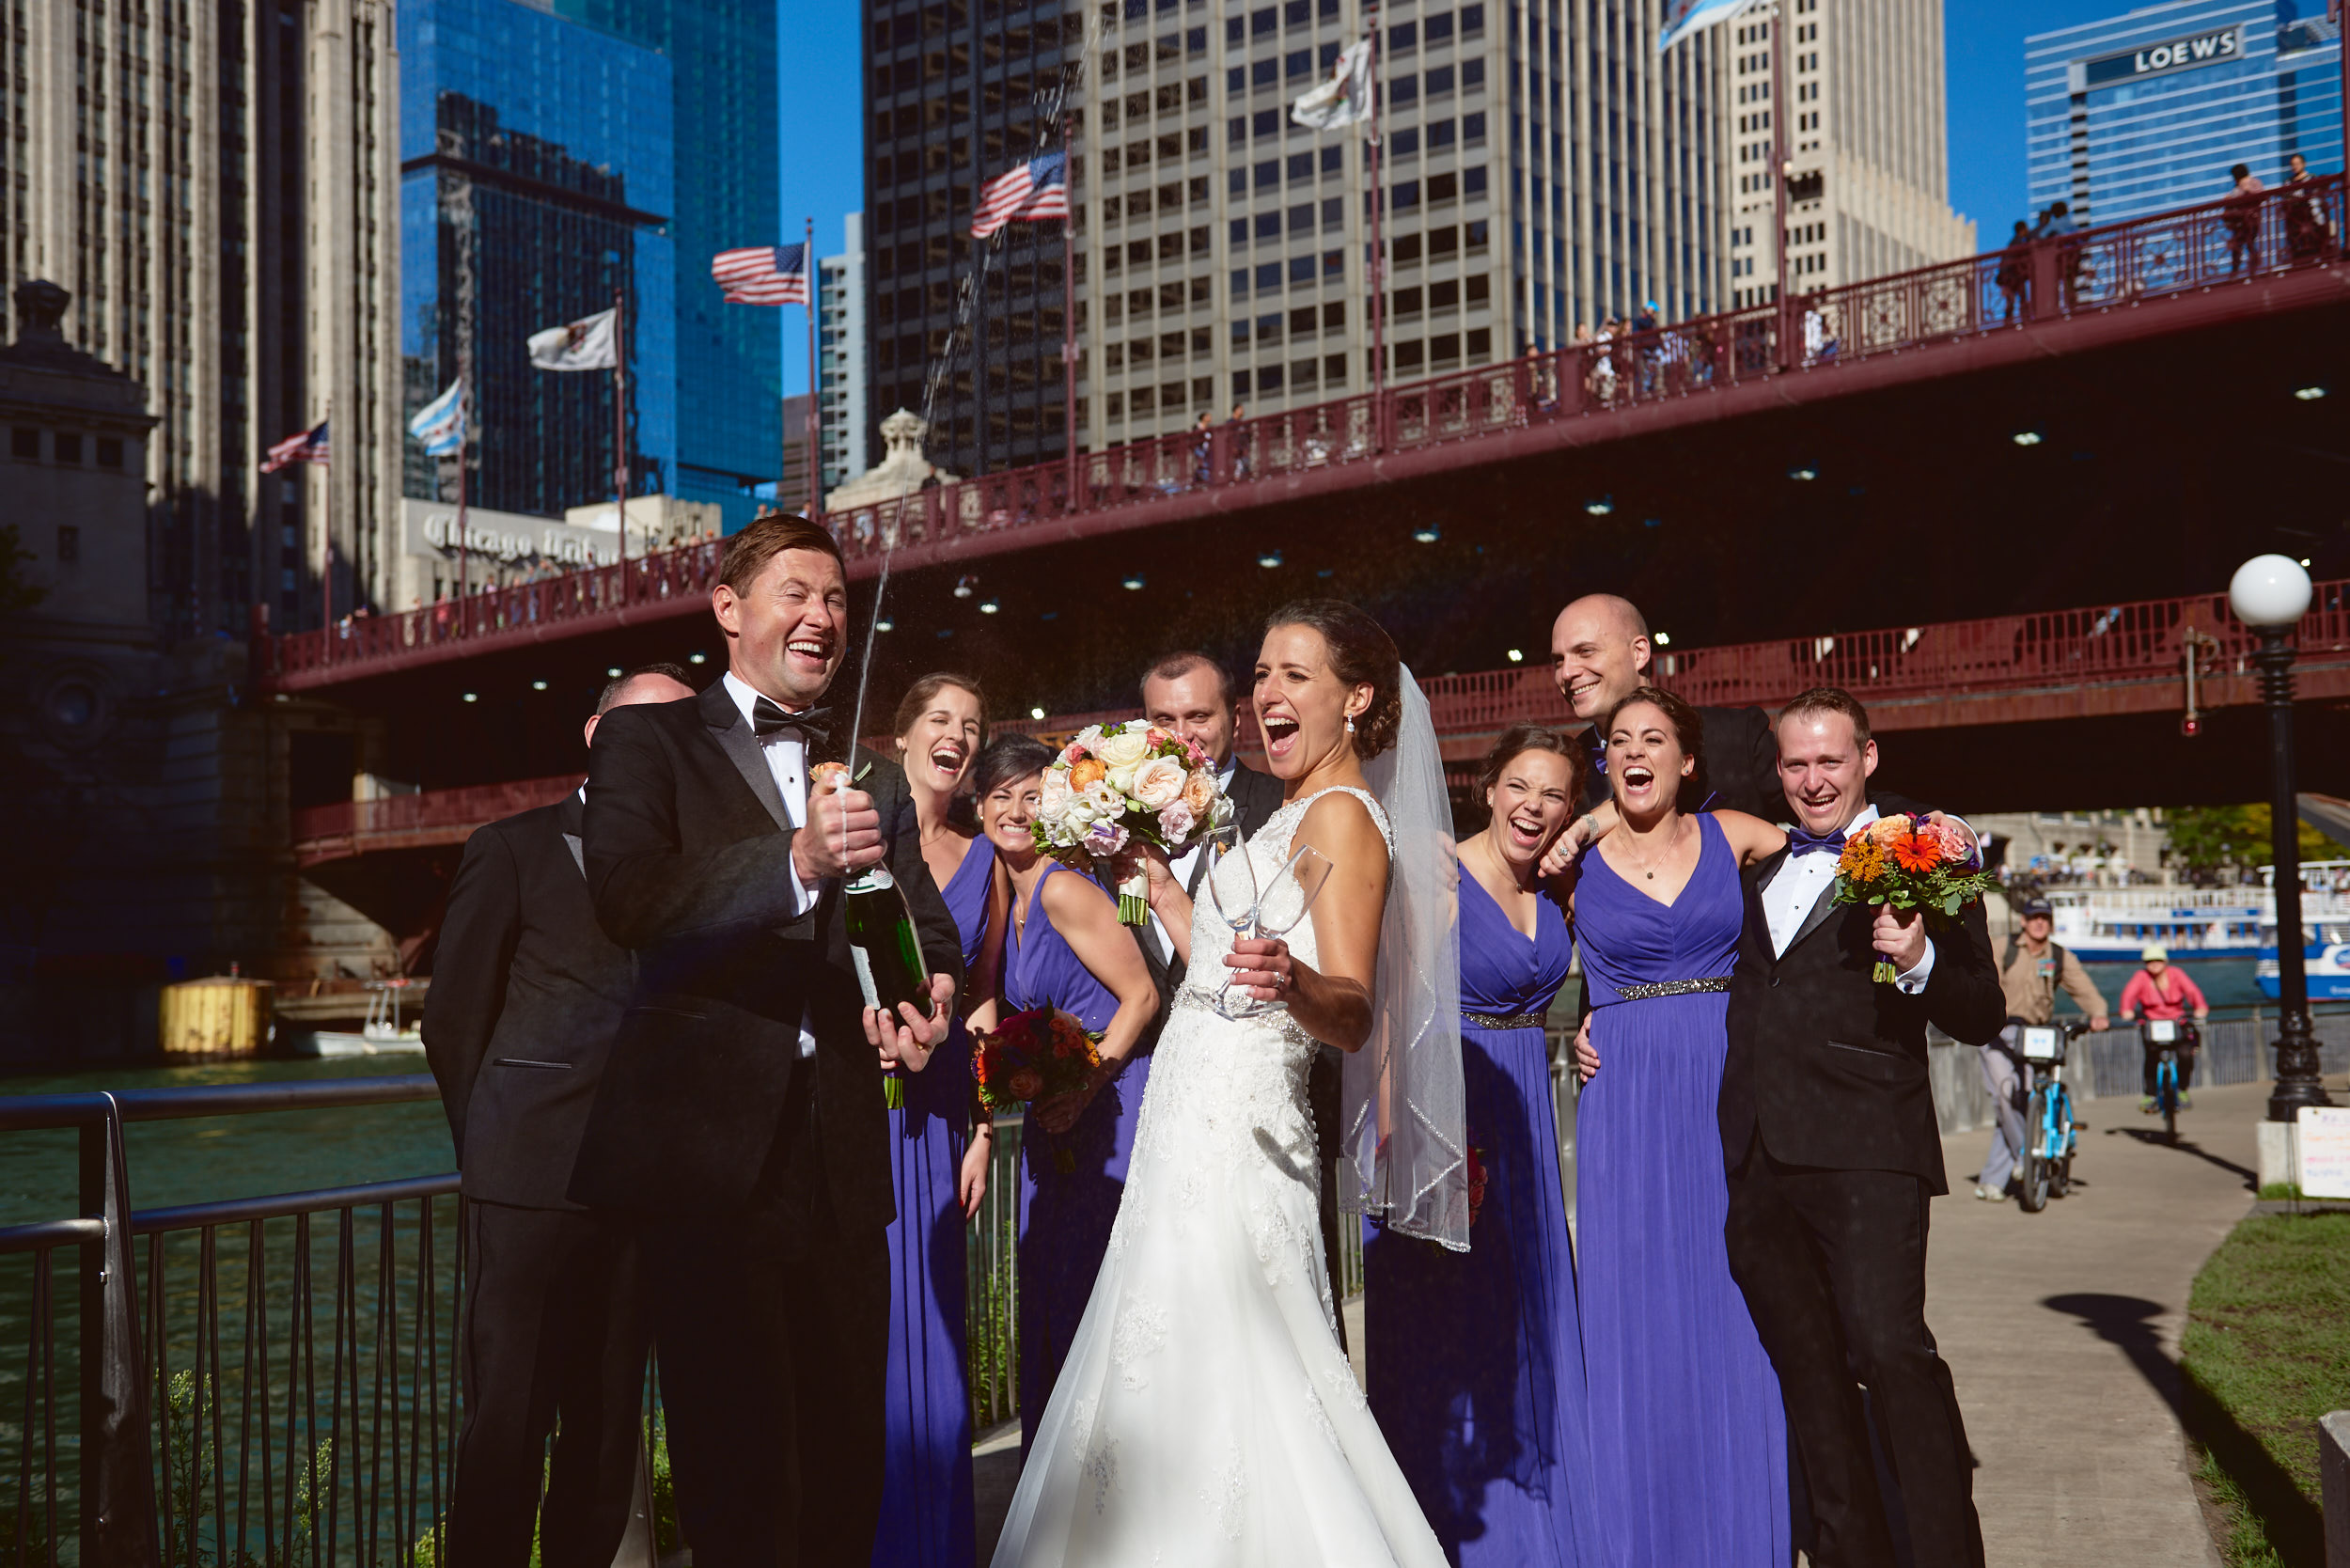 Chicago river walk bridal party